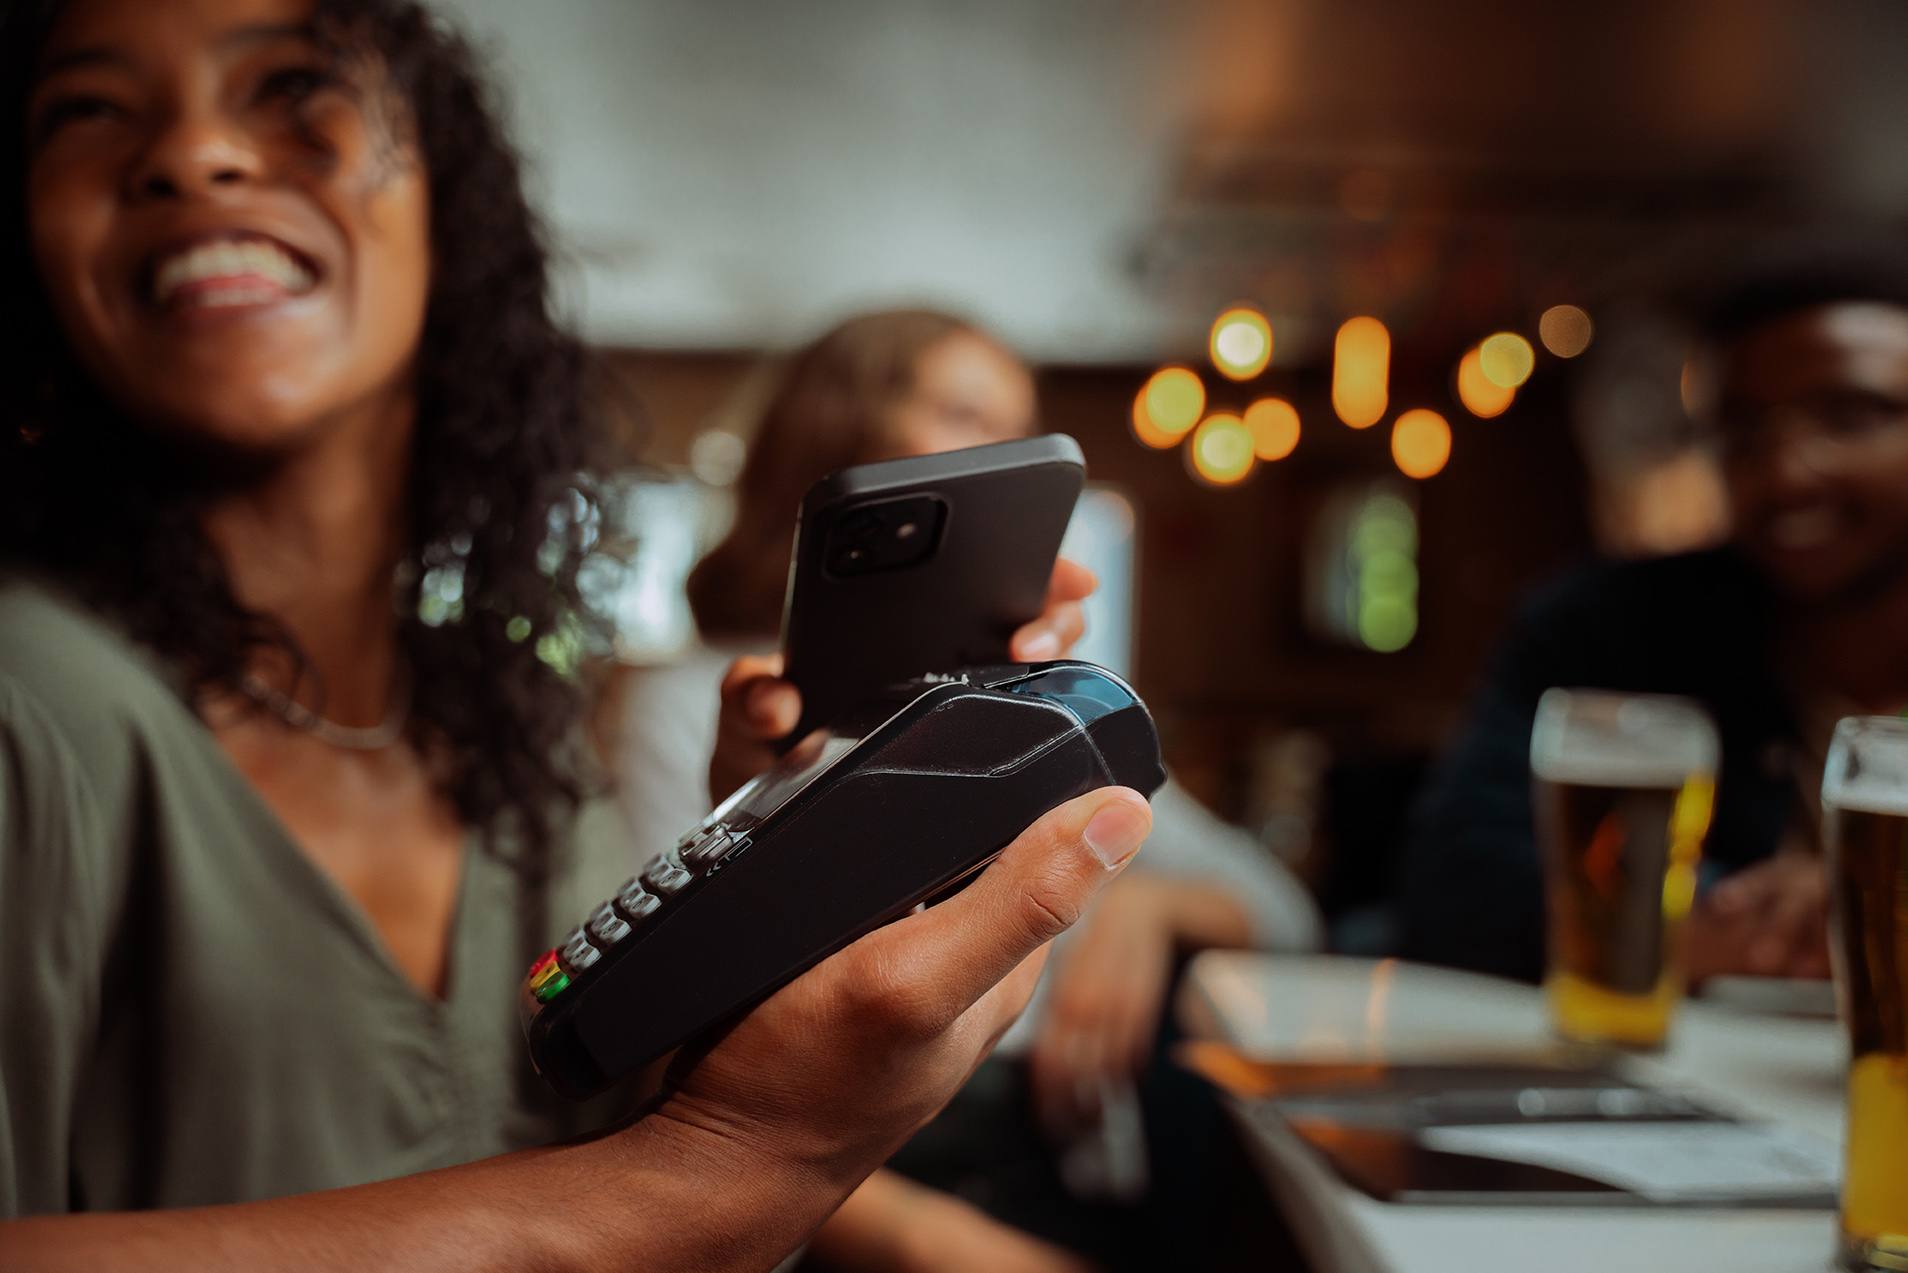 digital payment system at a restaurant/bar